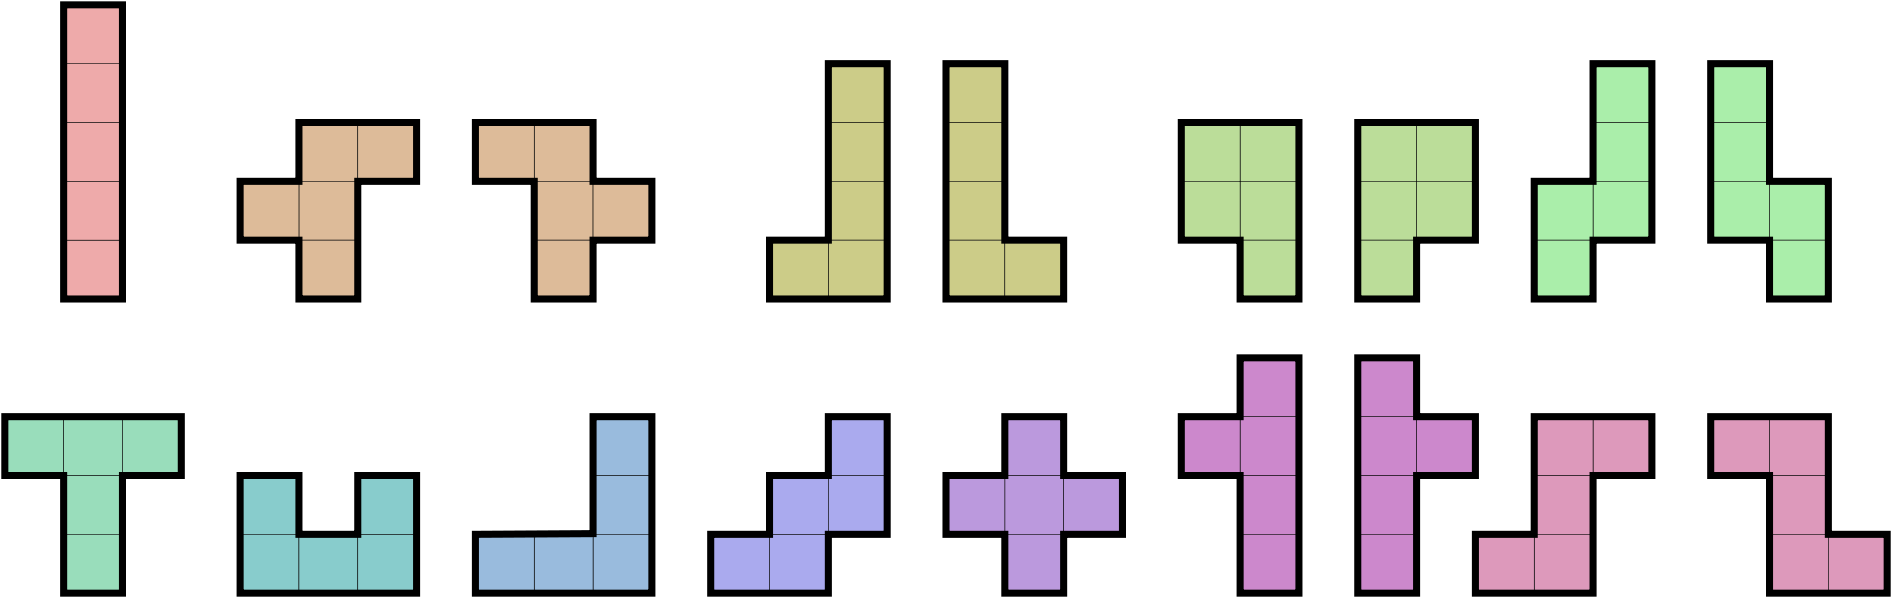 Tetris_ Blocks_ Variety.png PNG